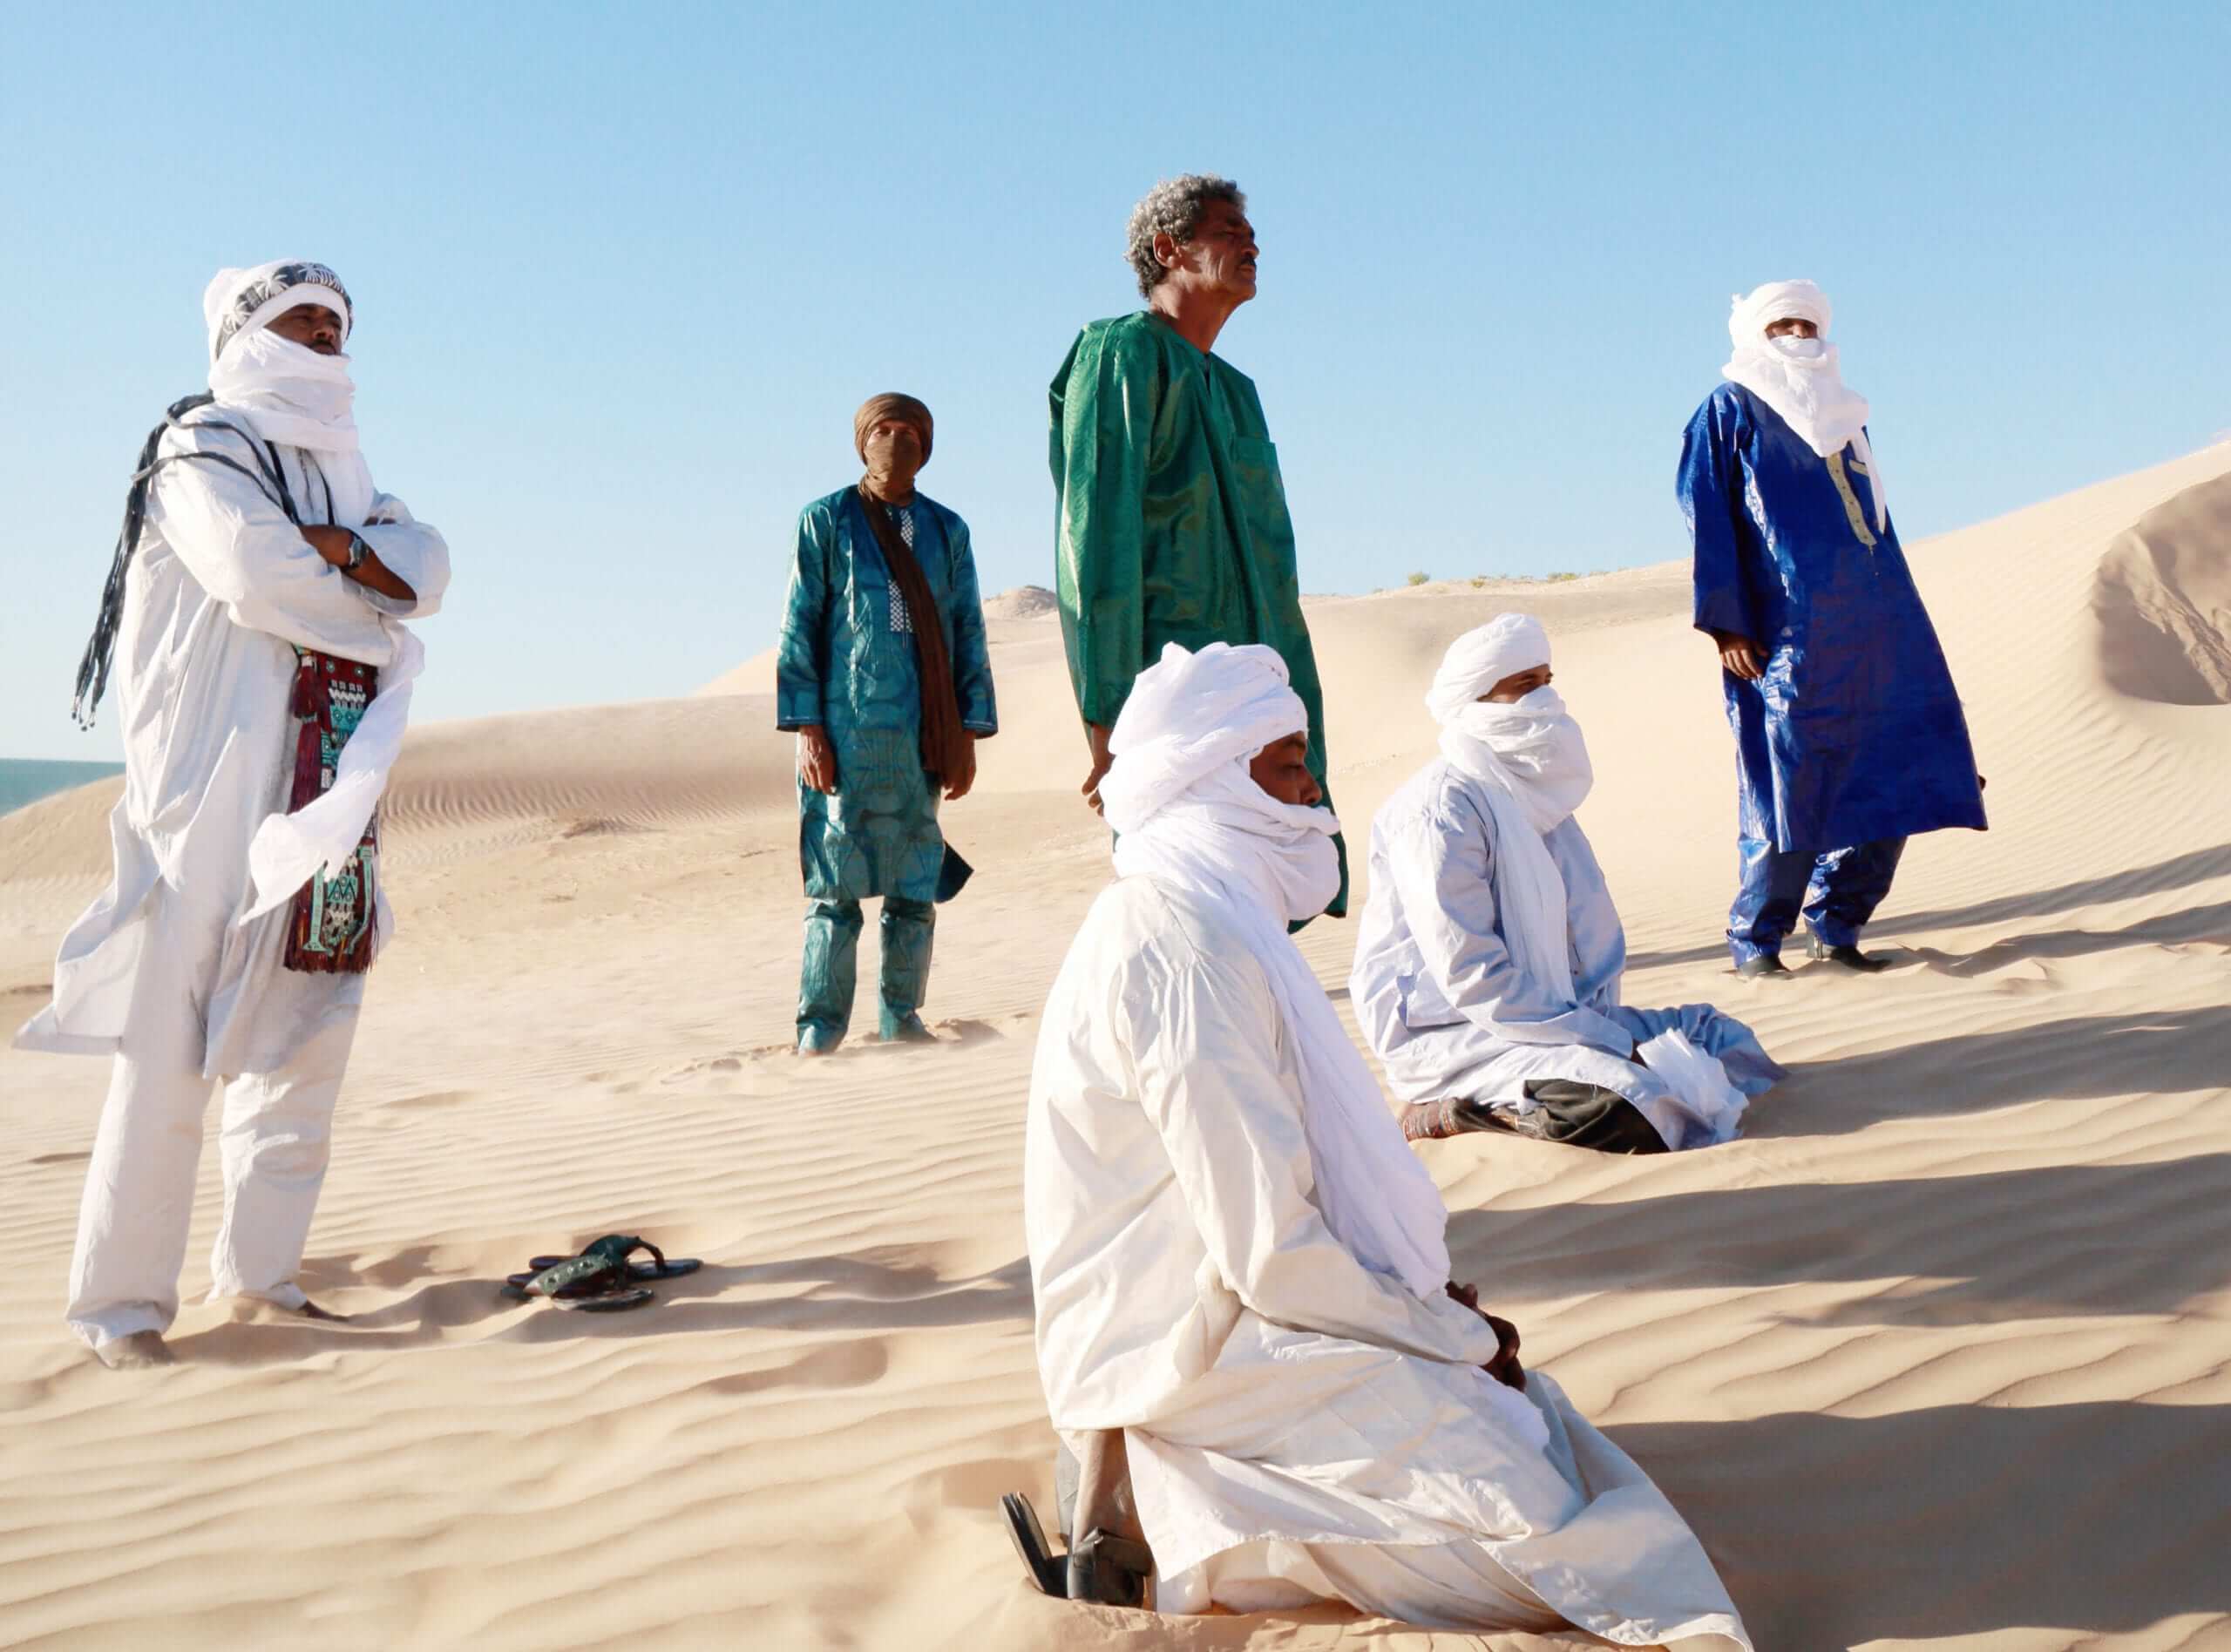 A band image: Tinariwen band members stand looking longingly at a desert vista